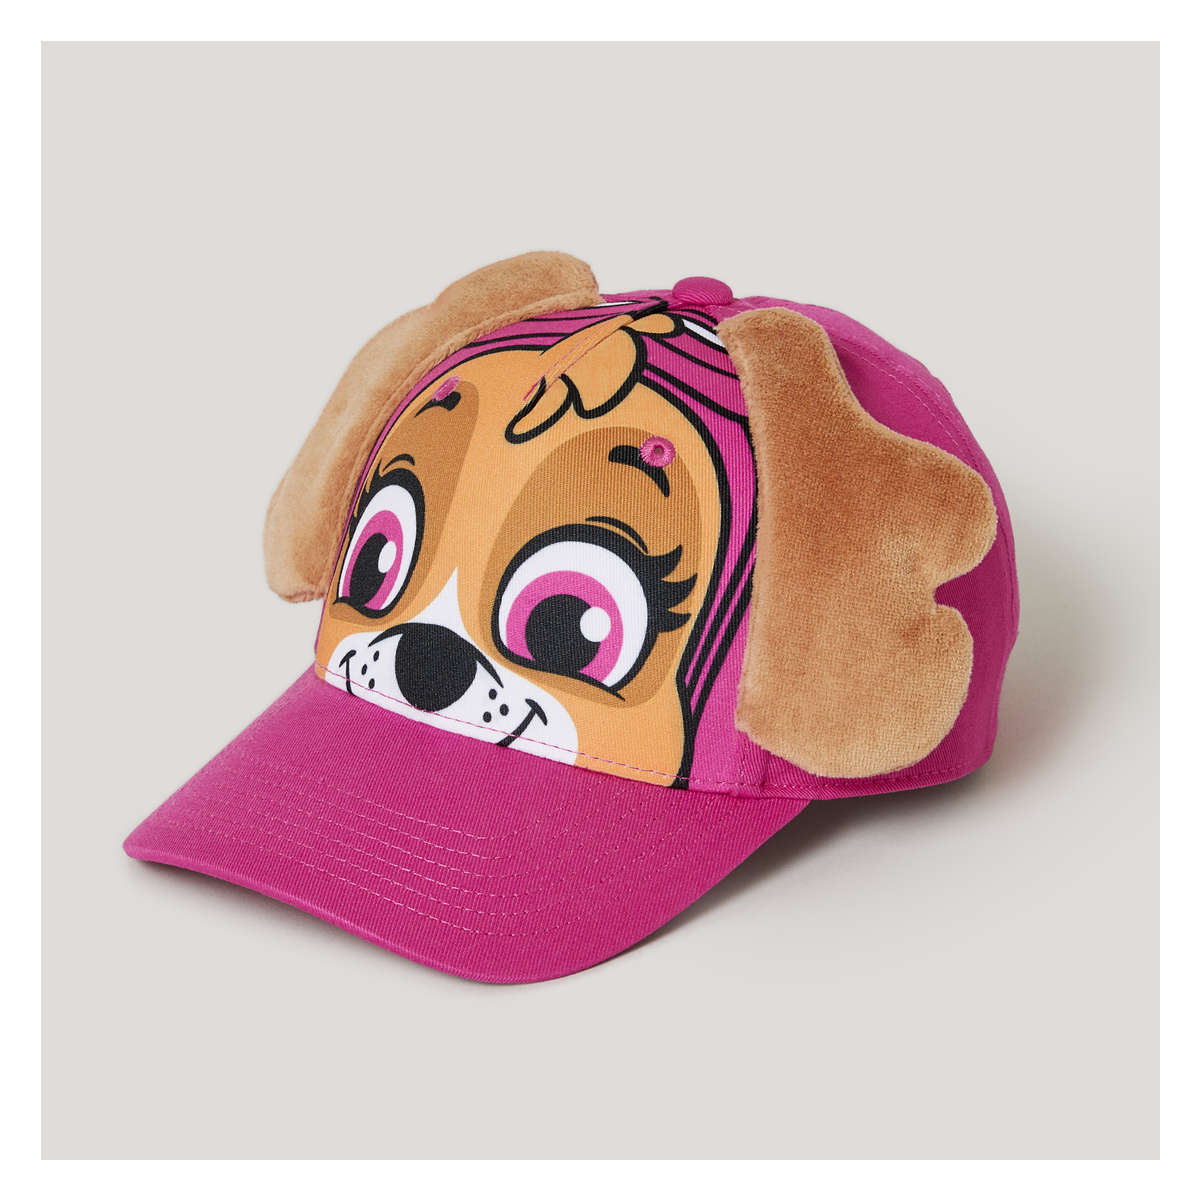 Nickelodeon Toddler Sun Hat for Girls Ages 2-4, Paw Patrol Kids Bucket Hat